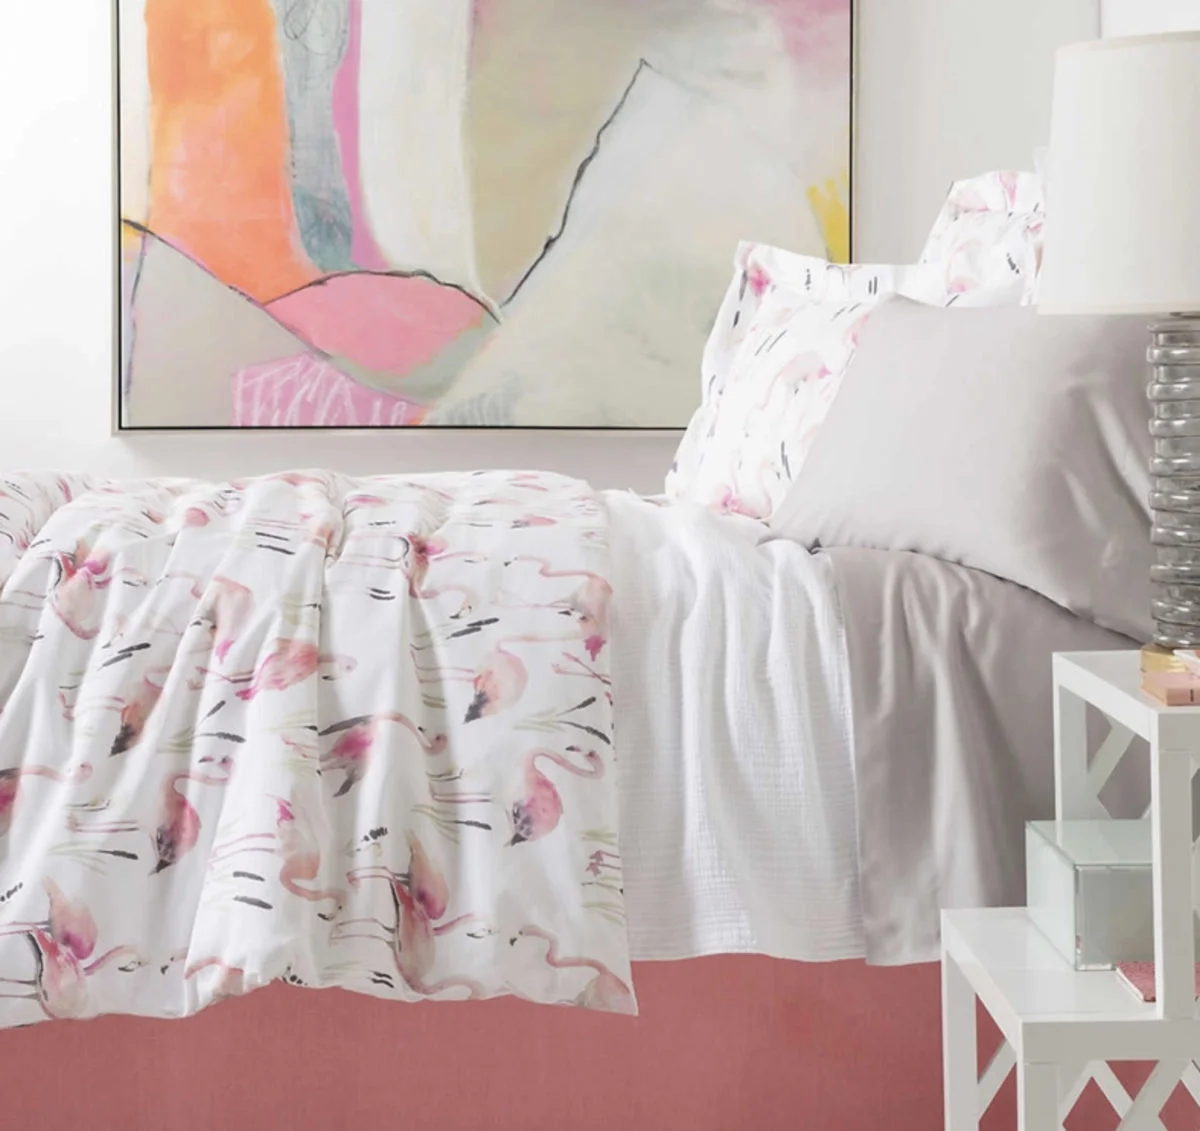 Pink Bed Room